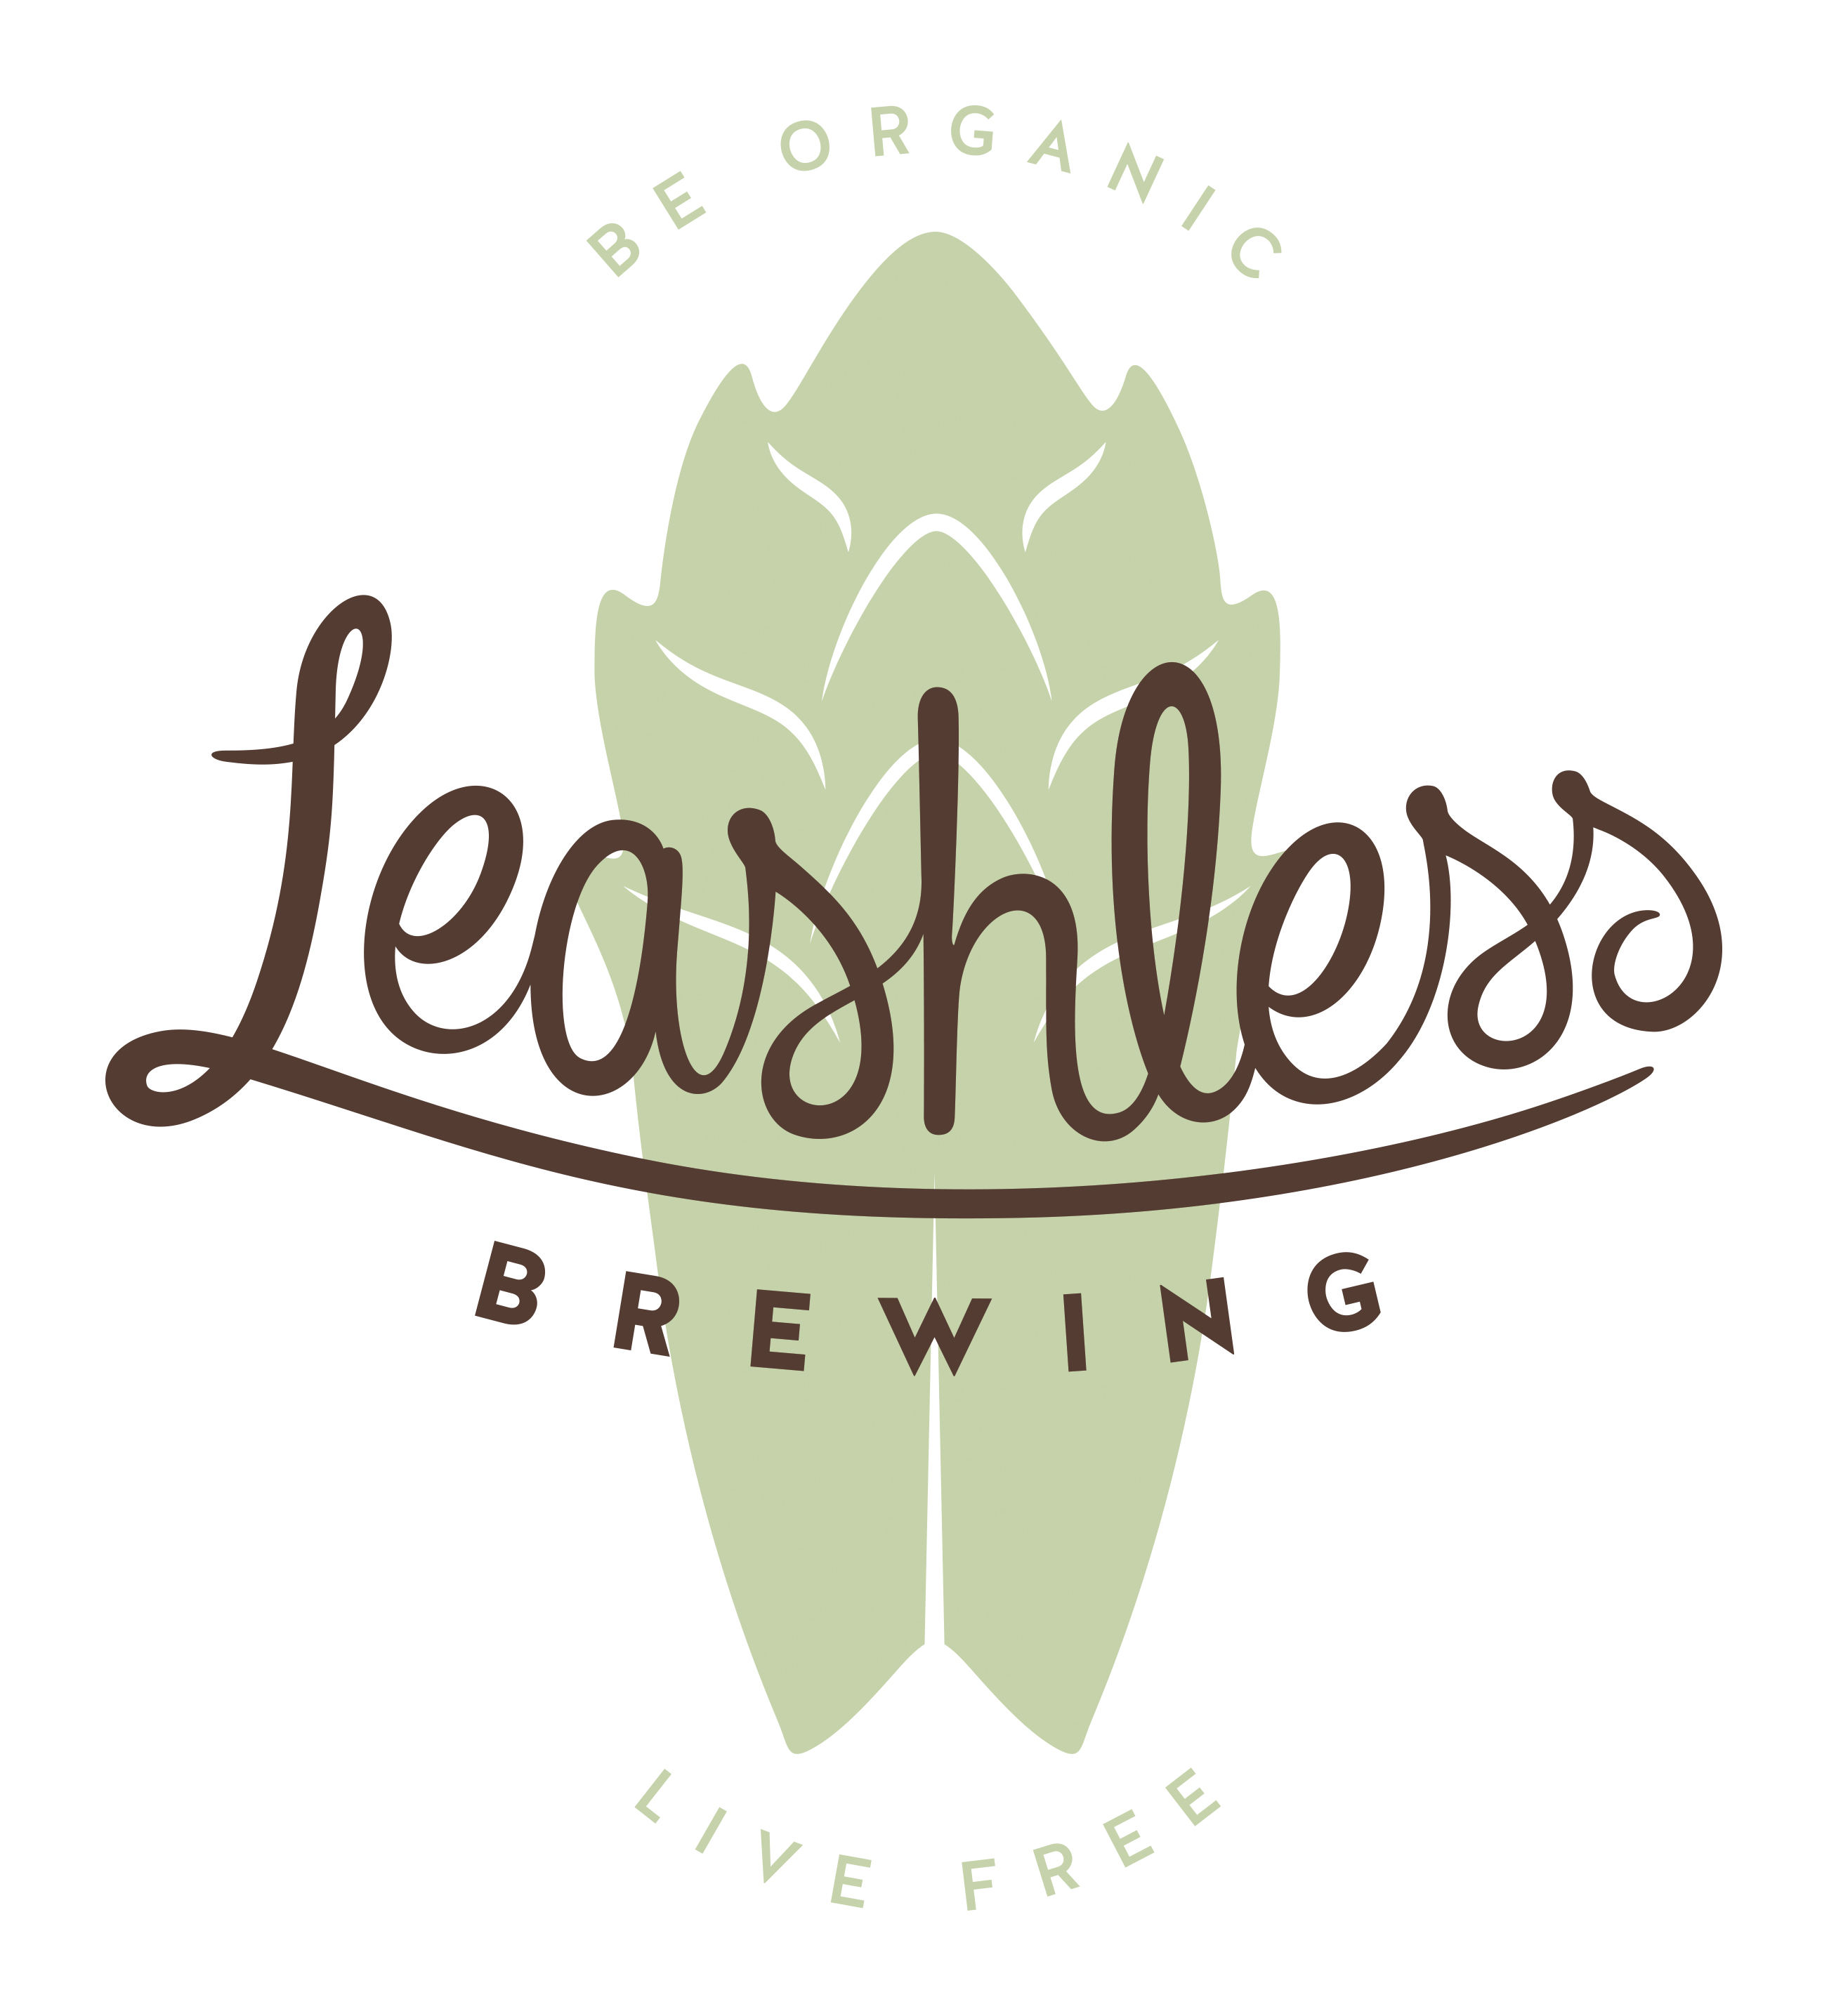 Leashless Brewing